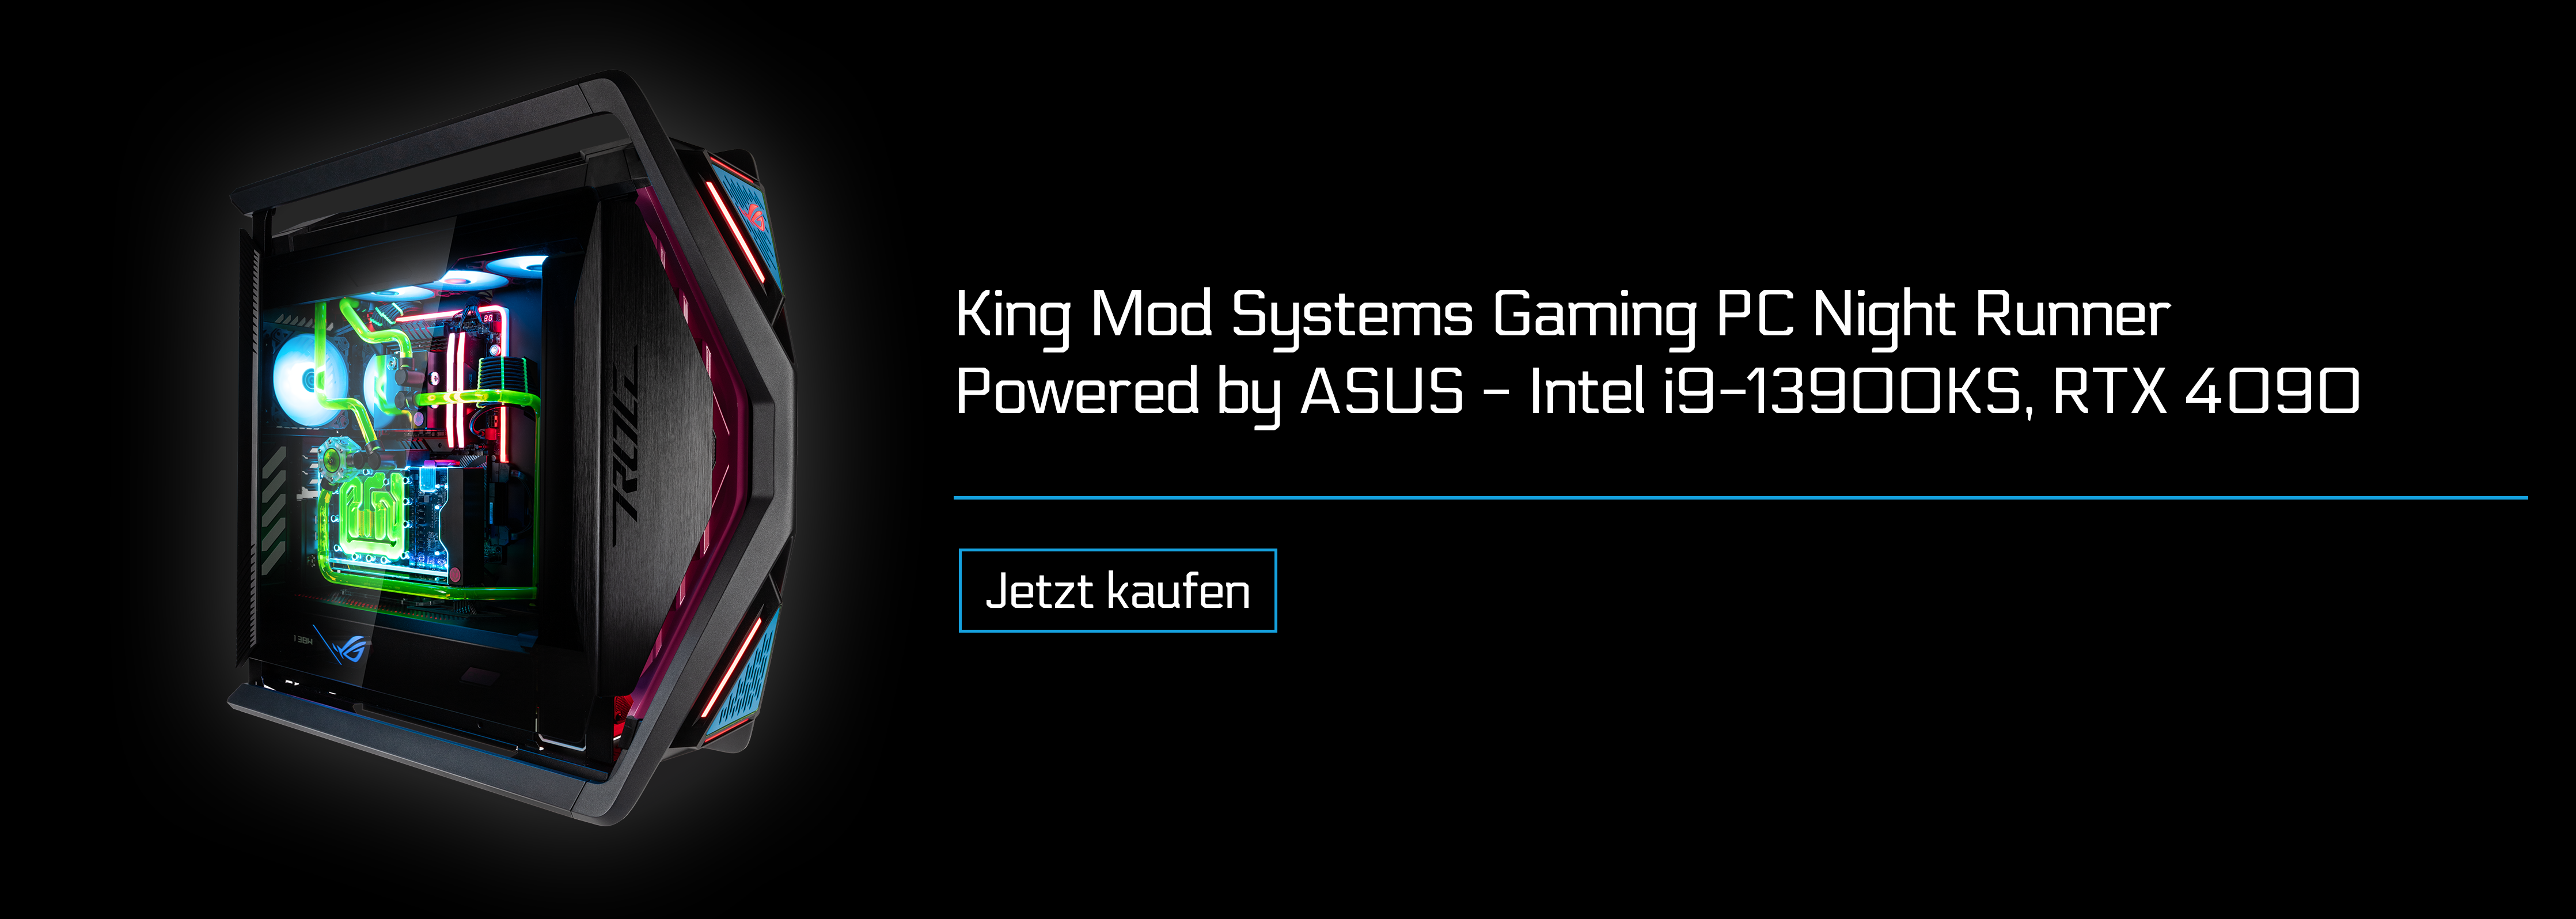 Gratis-Gaming-Zubehör jetzt zu King Mod Gaming-Systemen Powered by ASUS! -  Caseking Blog